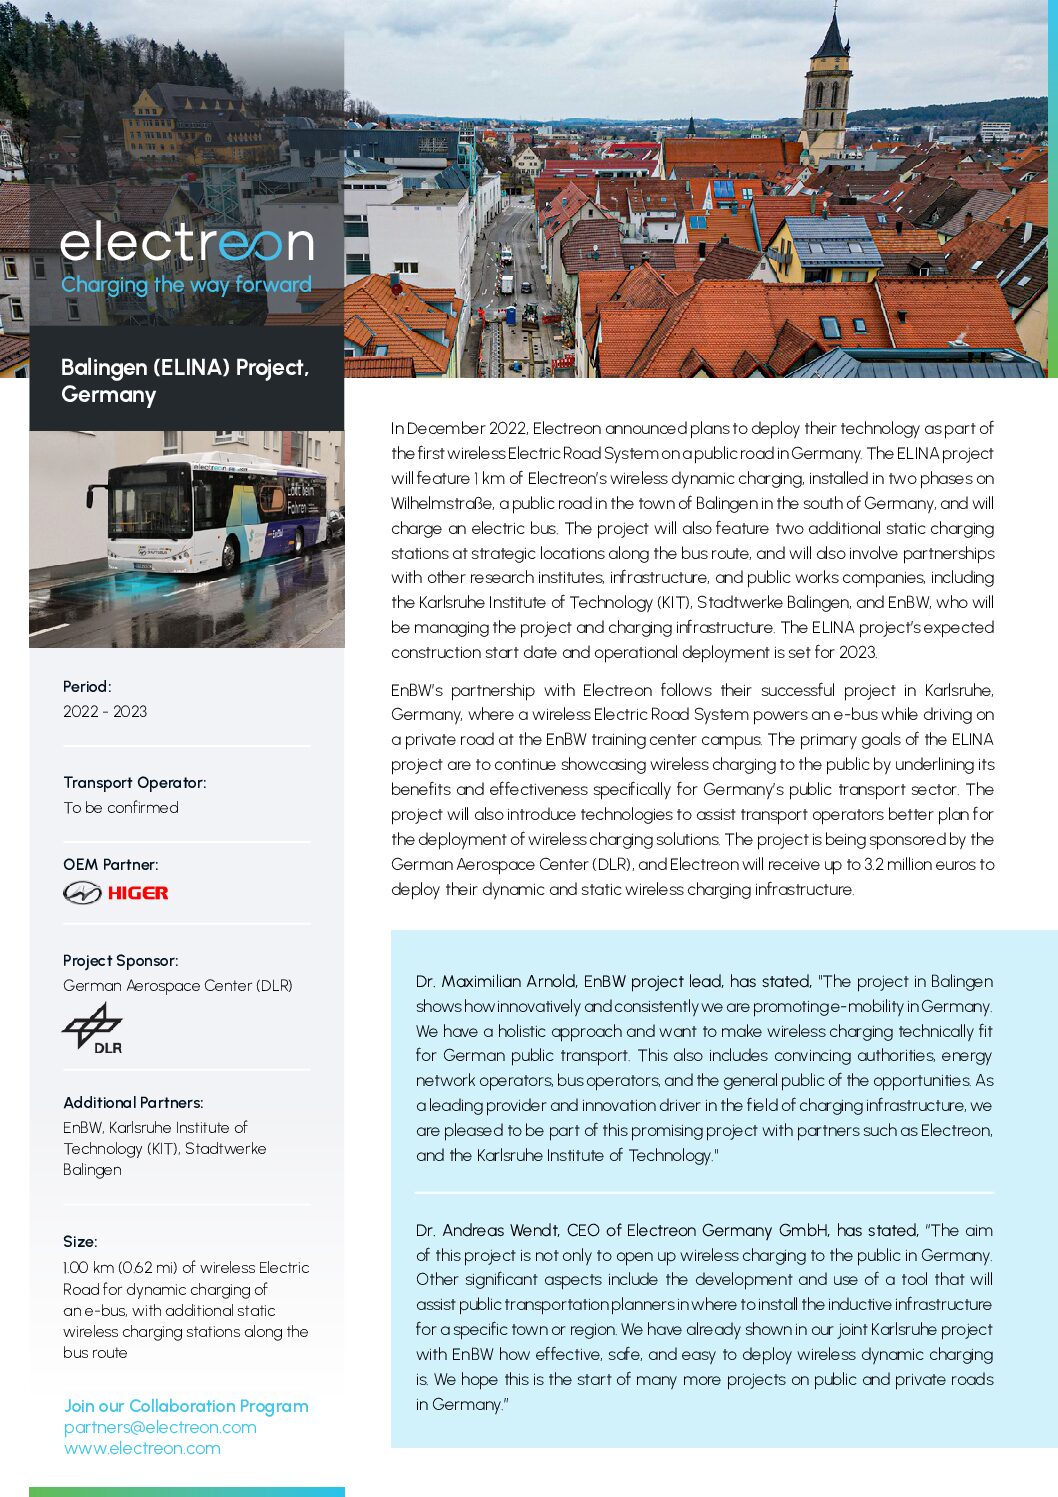 Electreon: Balingen (ELINA) Project, Germany